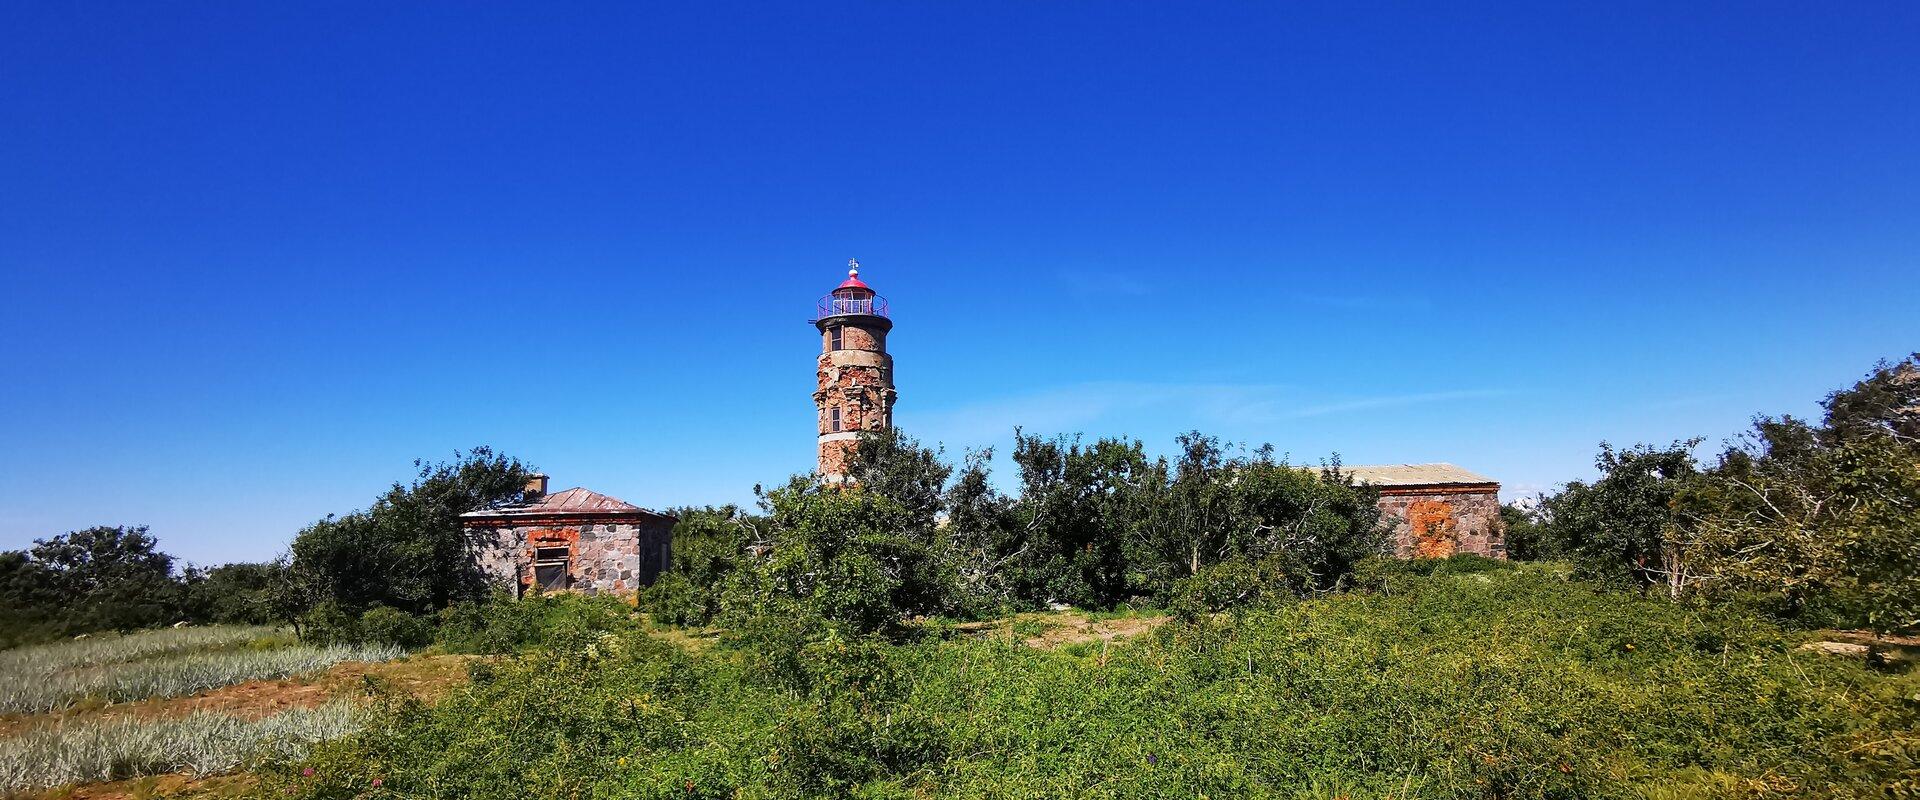 Sorgu lighthouse